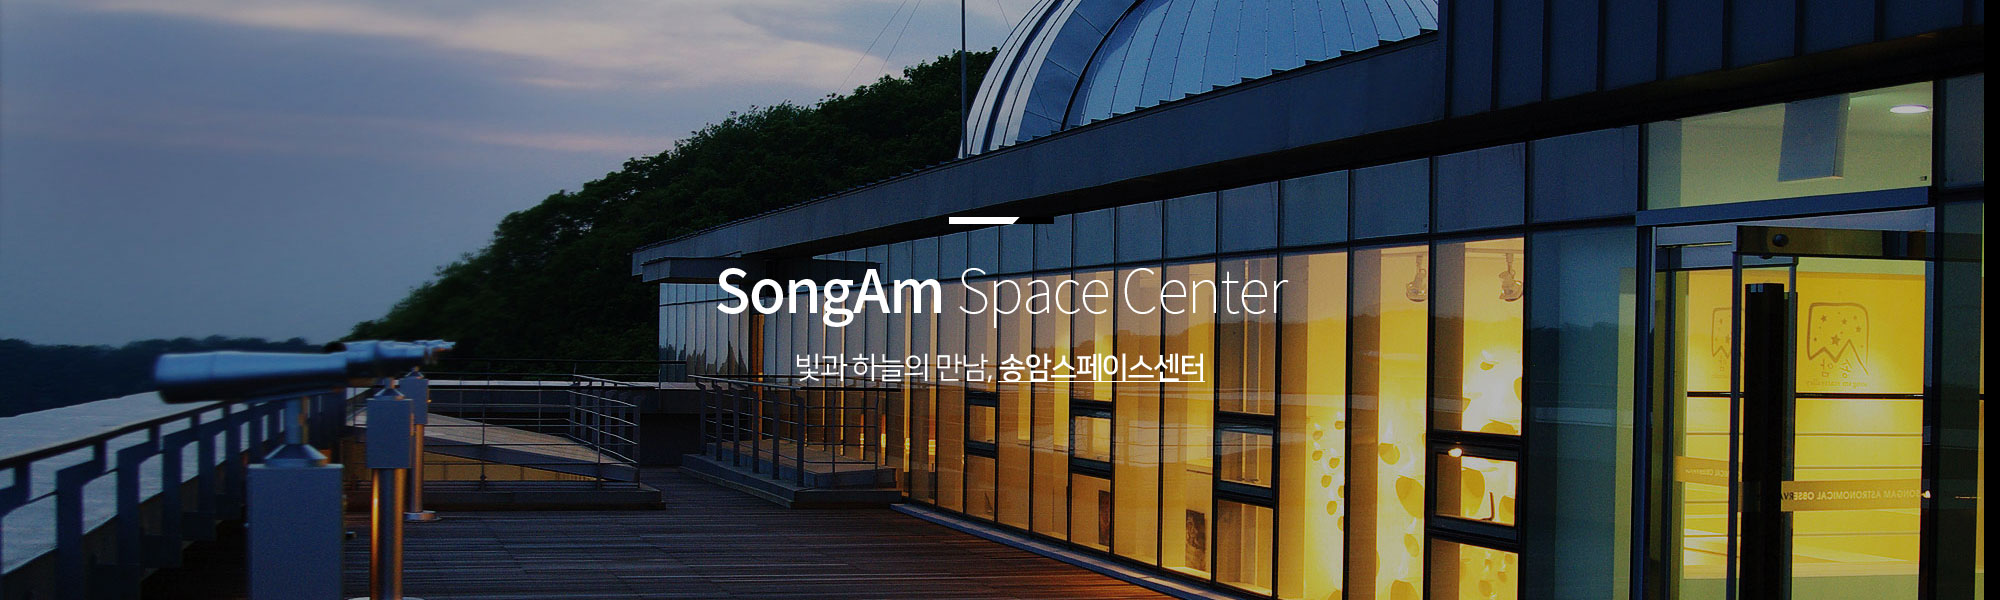 SongAm Space Center 빛과 하늘의 만남, 송암스페이스센터